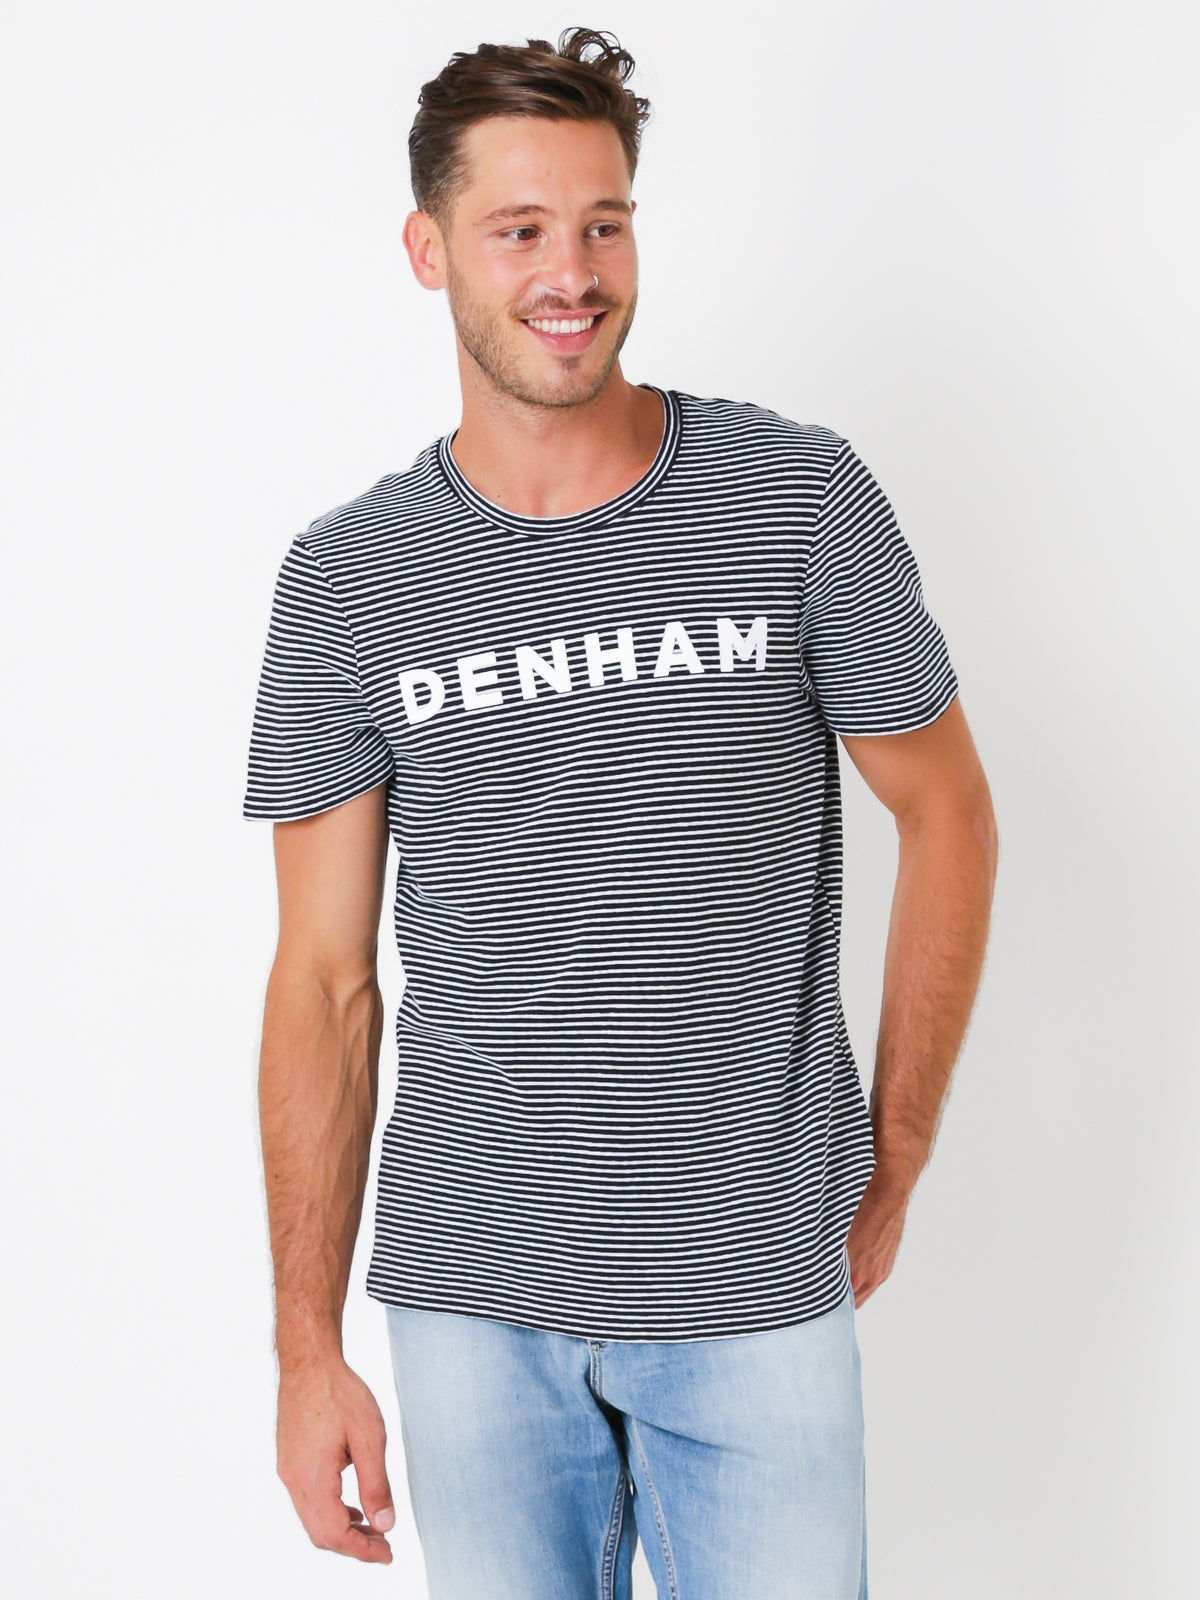 Denham Printed Stripe T-Shirt in Black